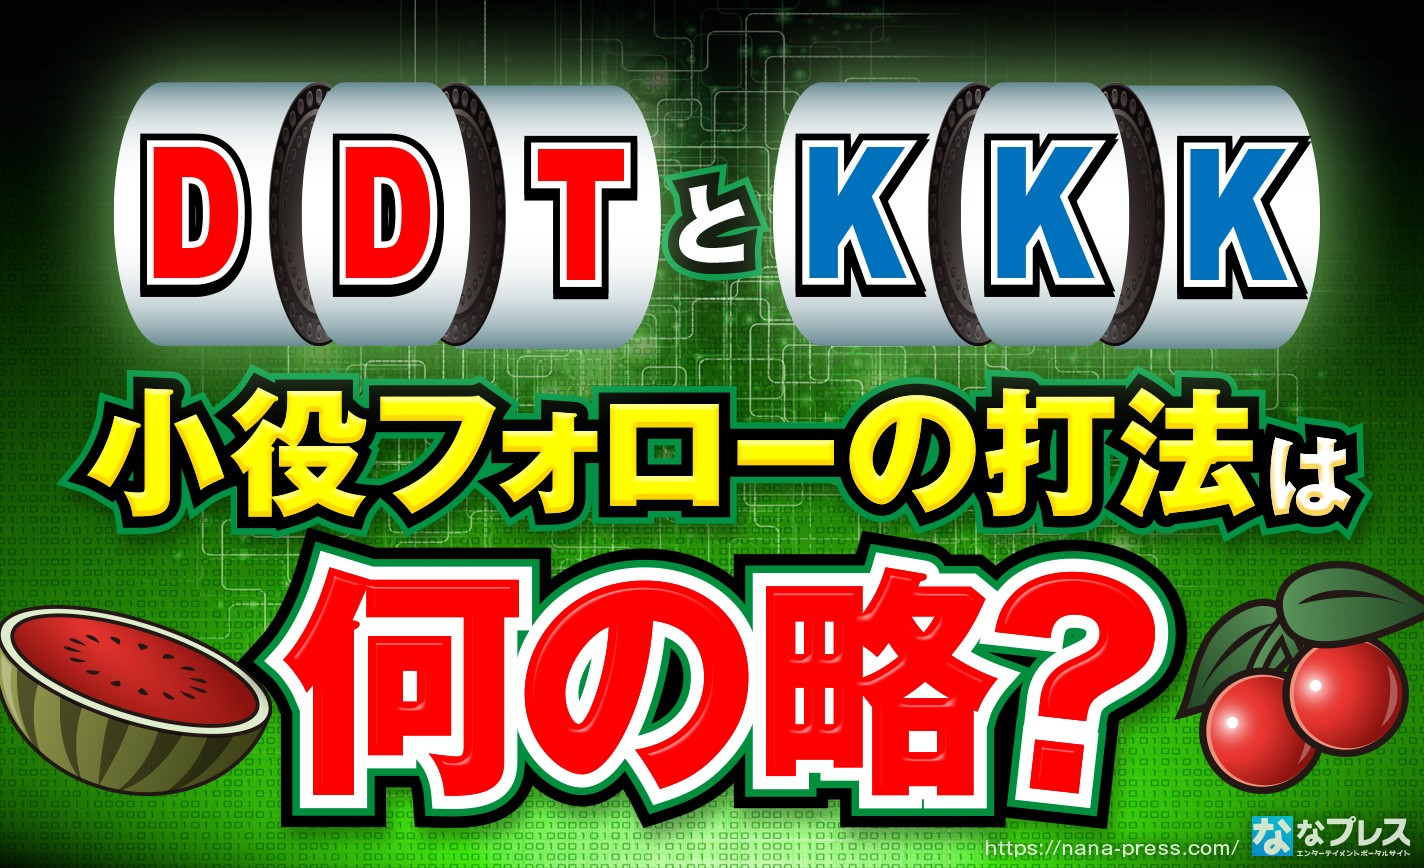 【DDTとKKK】パチスロ雑誌で使われてた小役フォローの打法は何の略か知っているか！ eyecatch-image